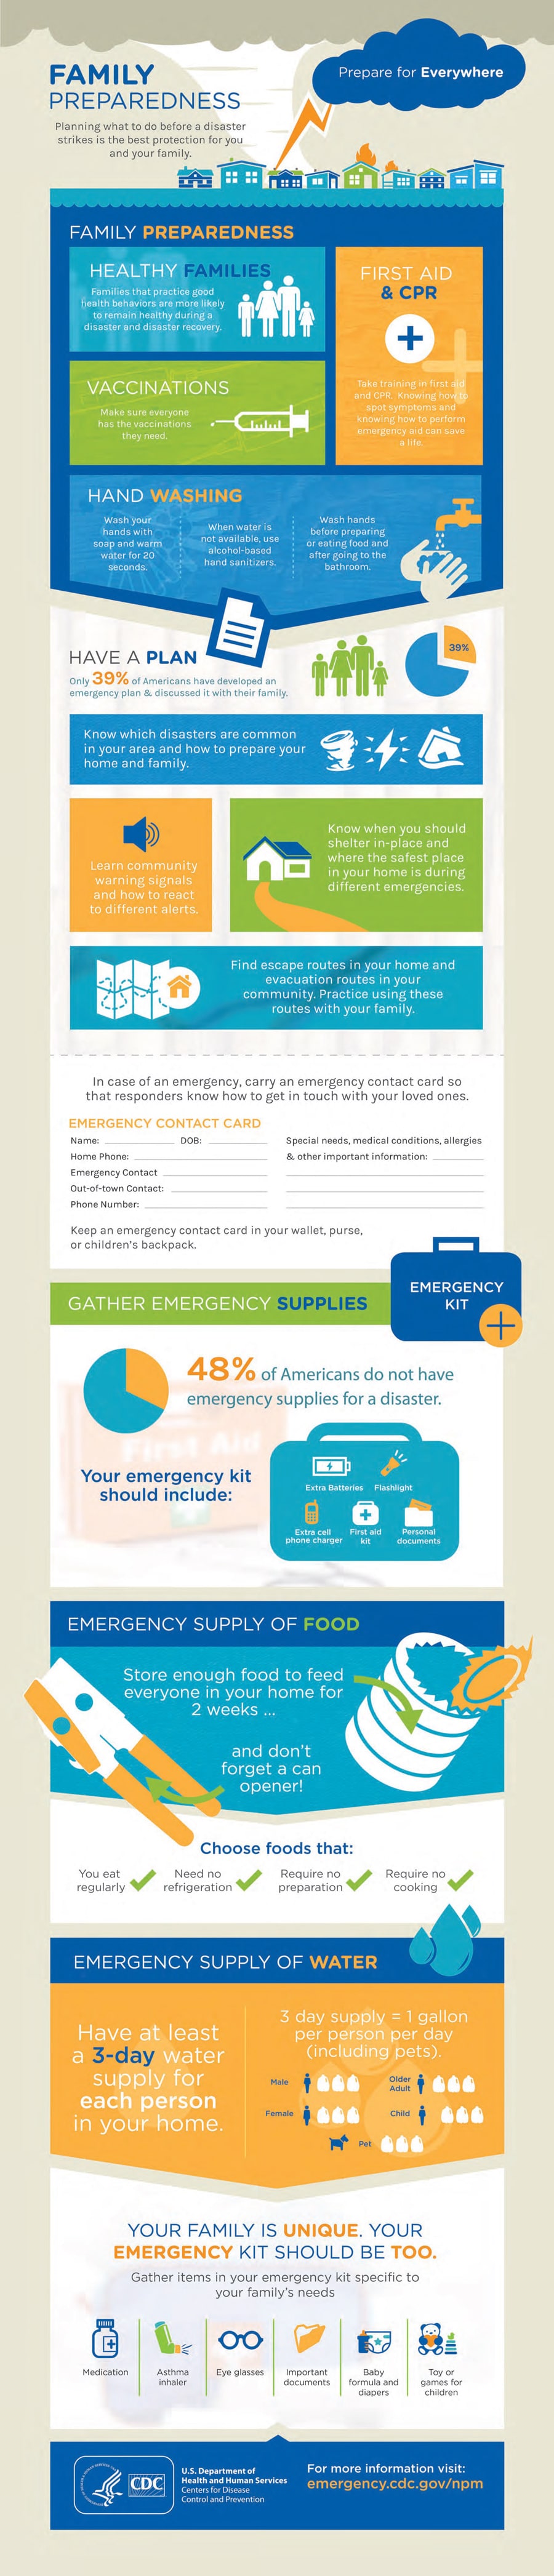 family preparedness infographic